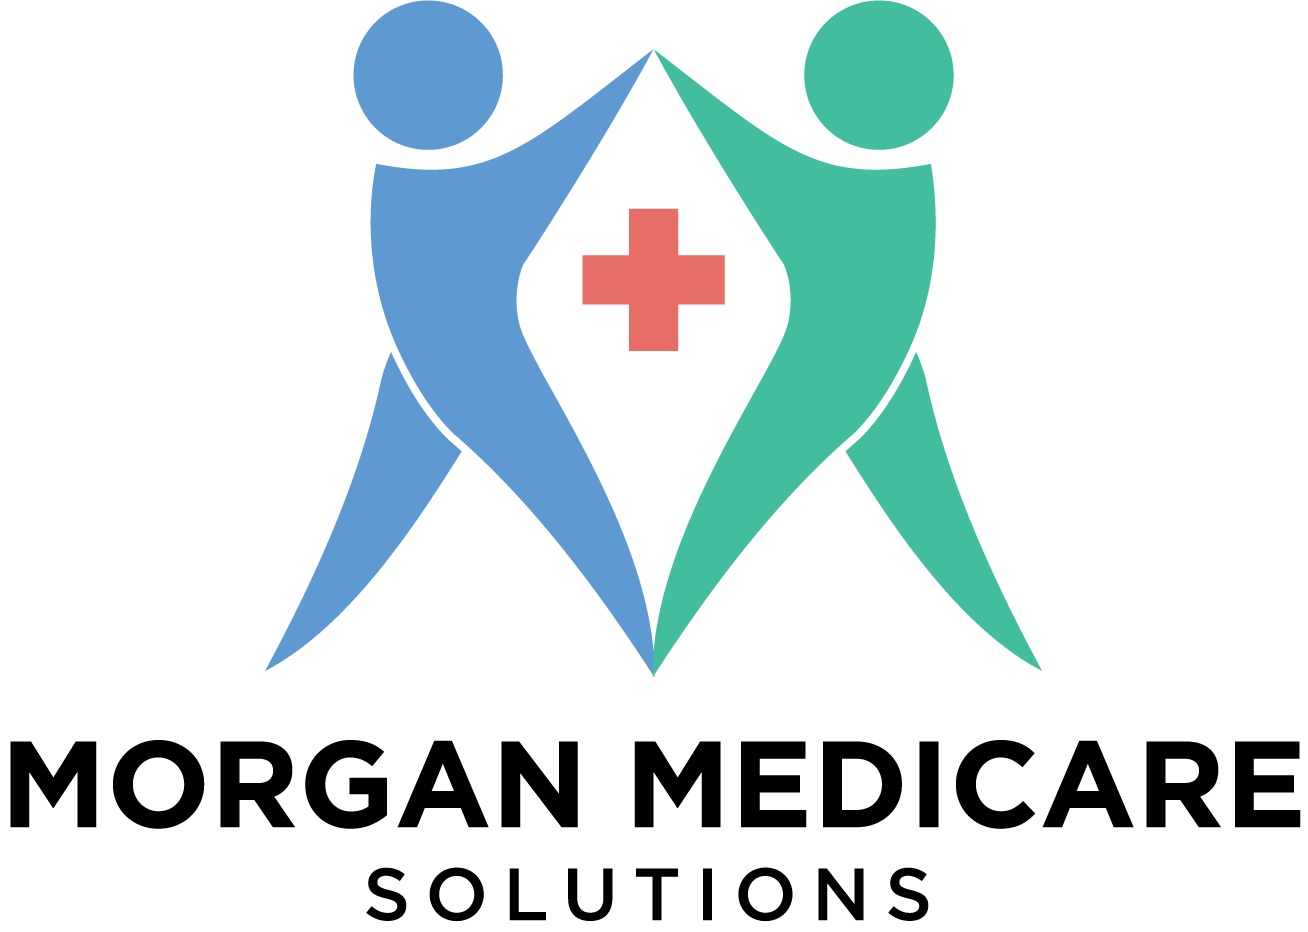 Morgan Medicare Solutions, LLC's Image